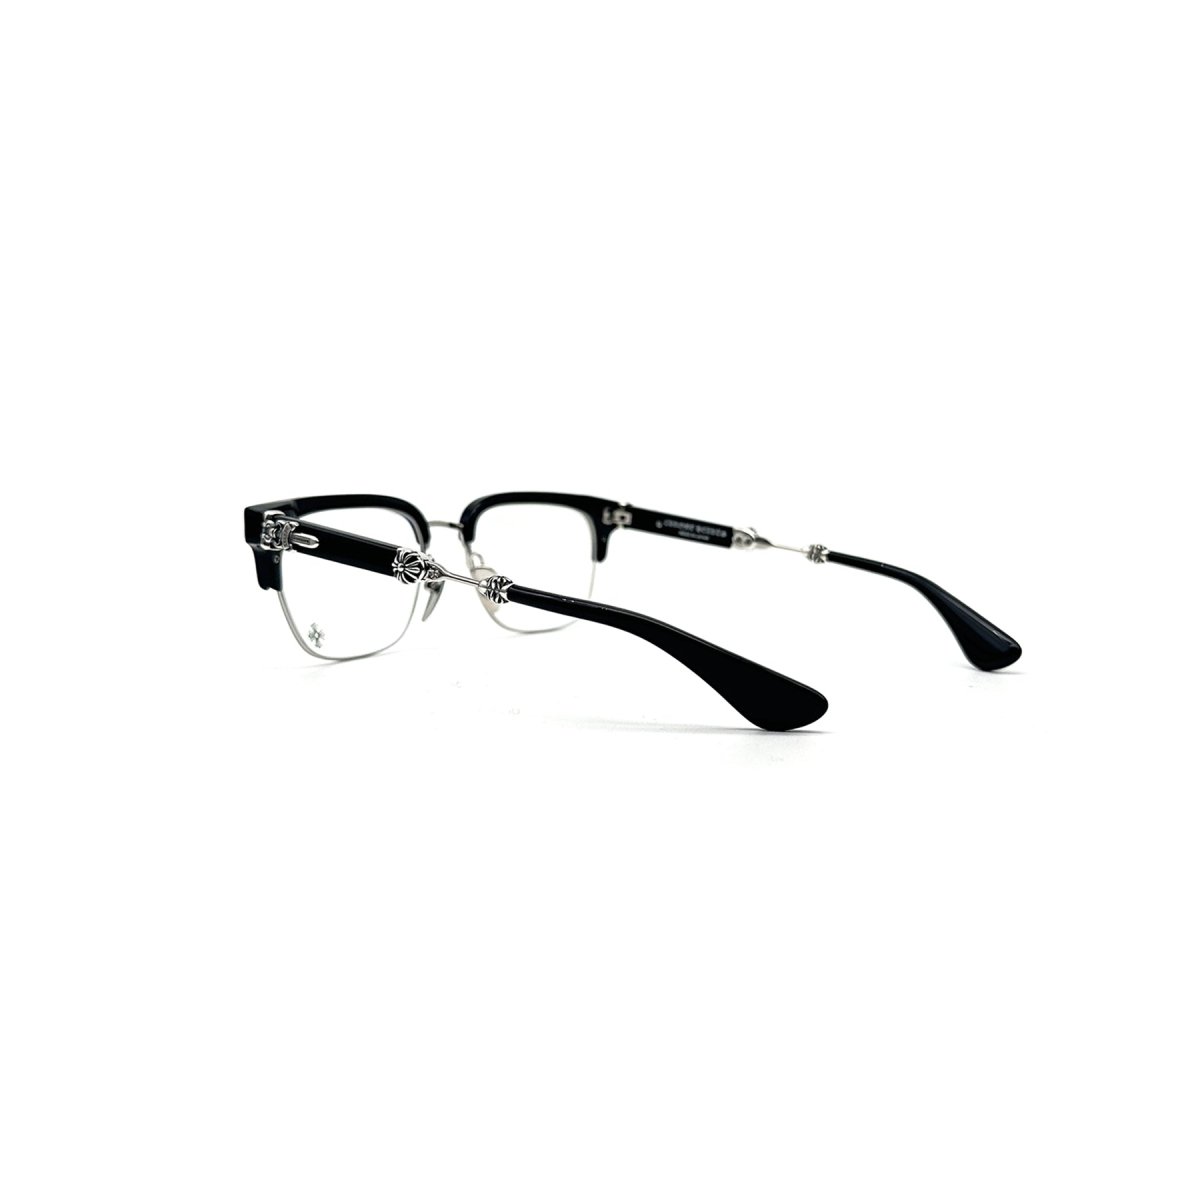 Chrome Hearts Evagilist BK/SS Glasses Frame for Unique Style